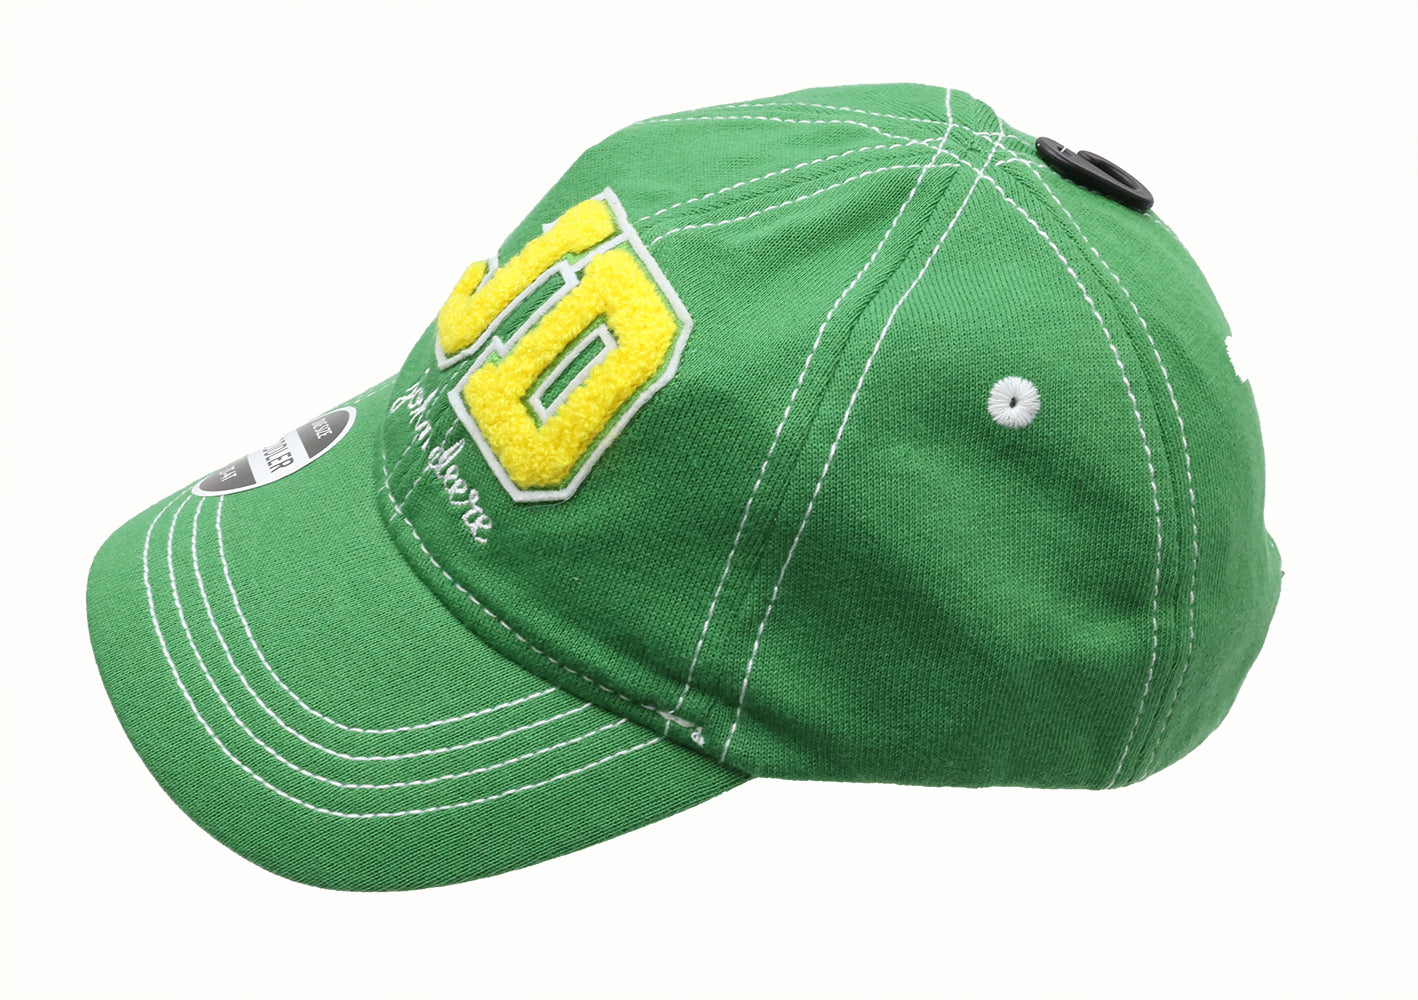 John Deere Green Toddler Baseball Cap/Hat - LP83651